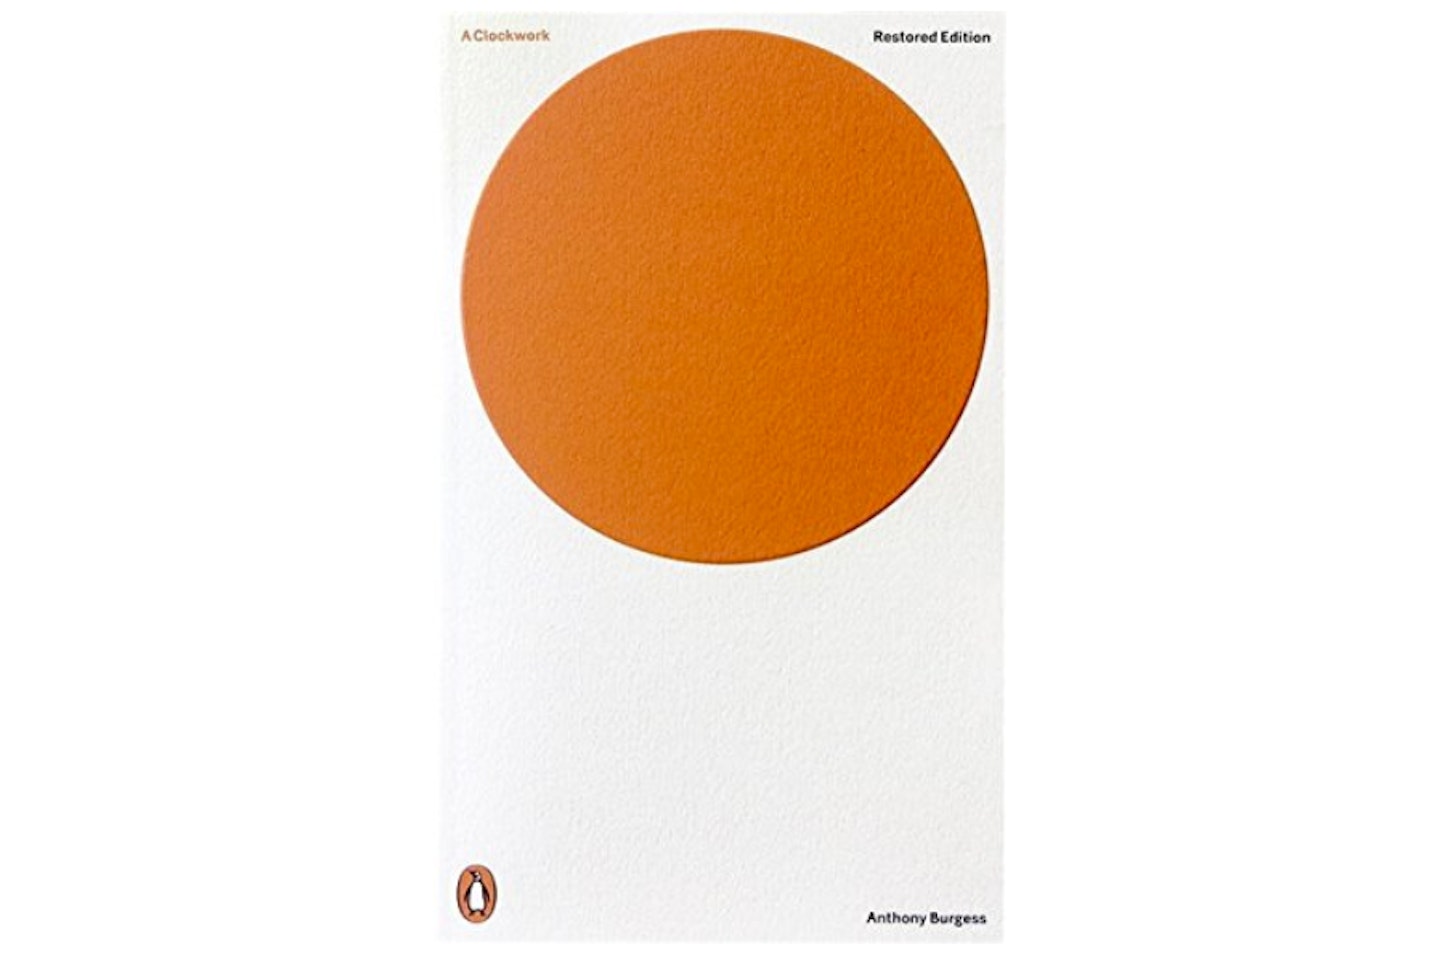 A Clockwork Orange by Anthony Burgees